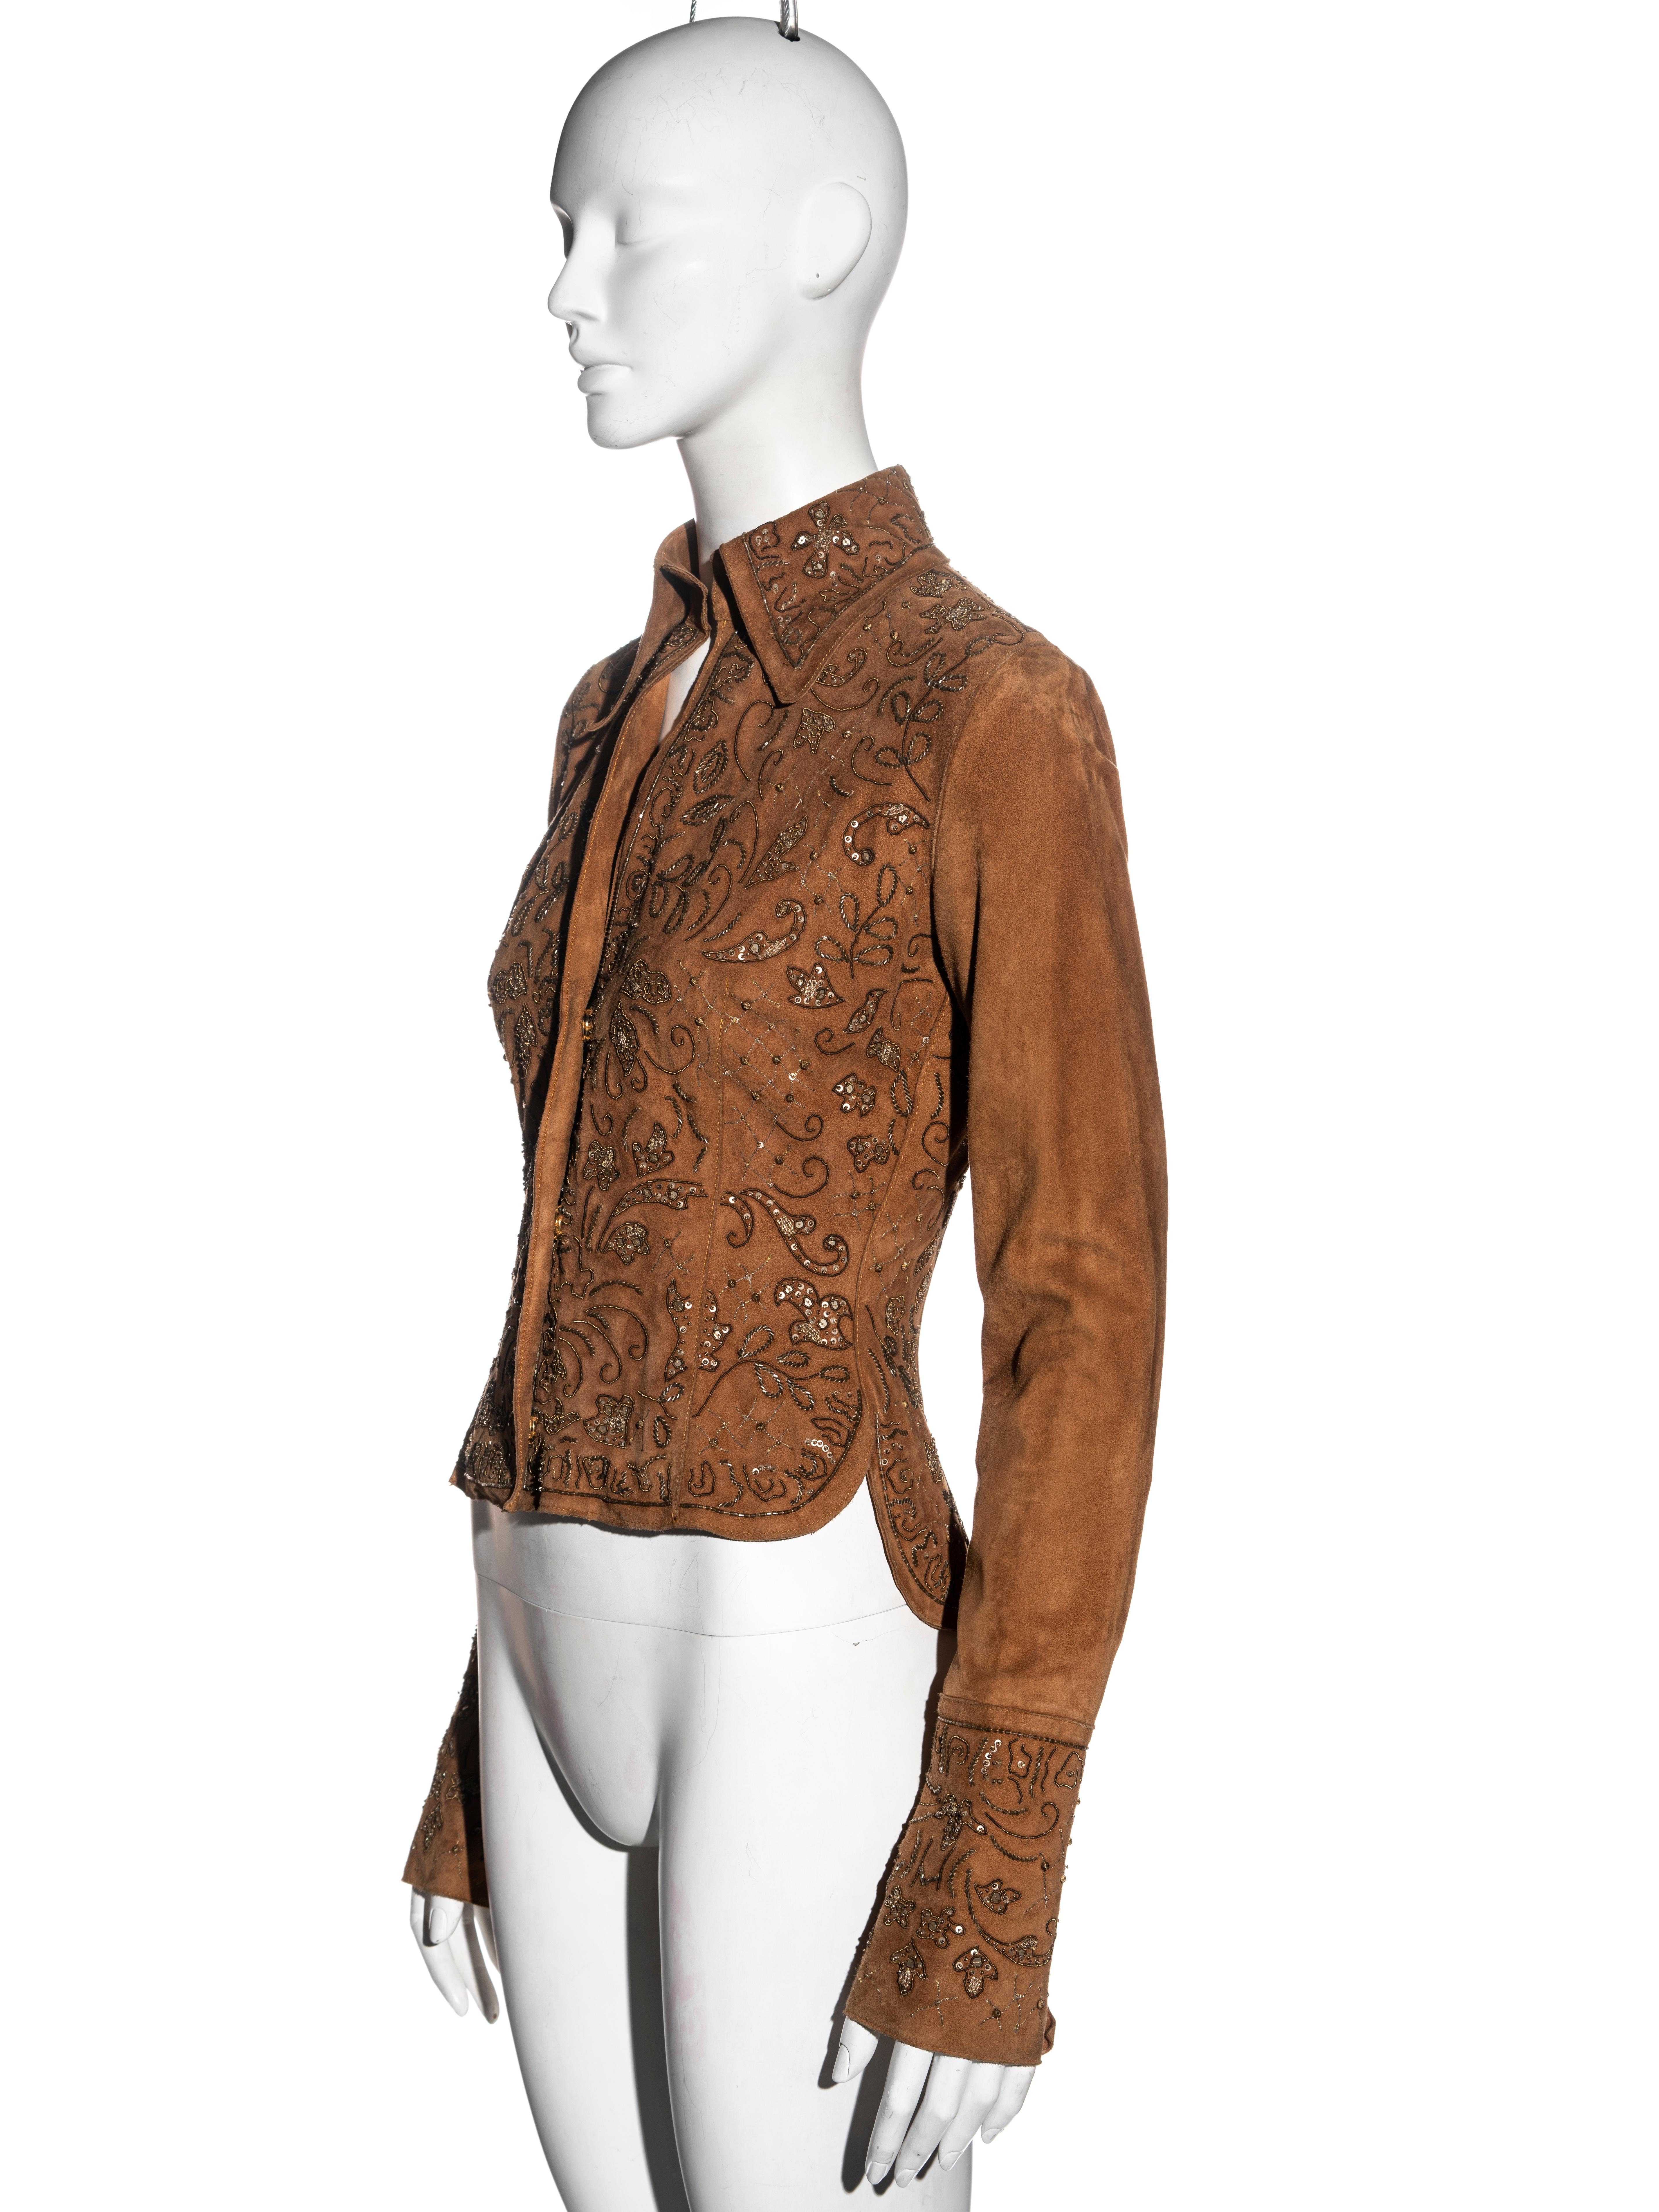 Dolce & Gabbana brown goat suede embellished shirt, ss 2001 1